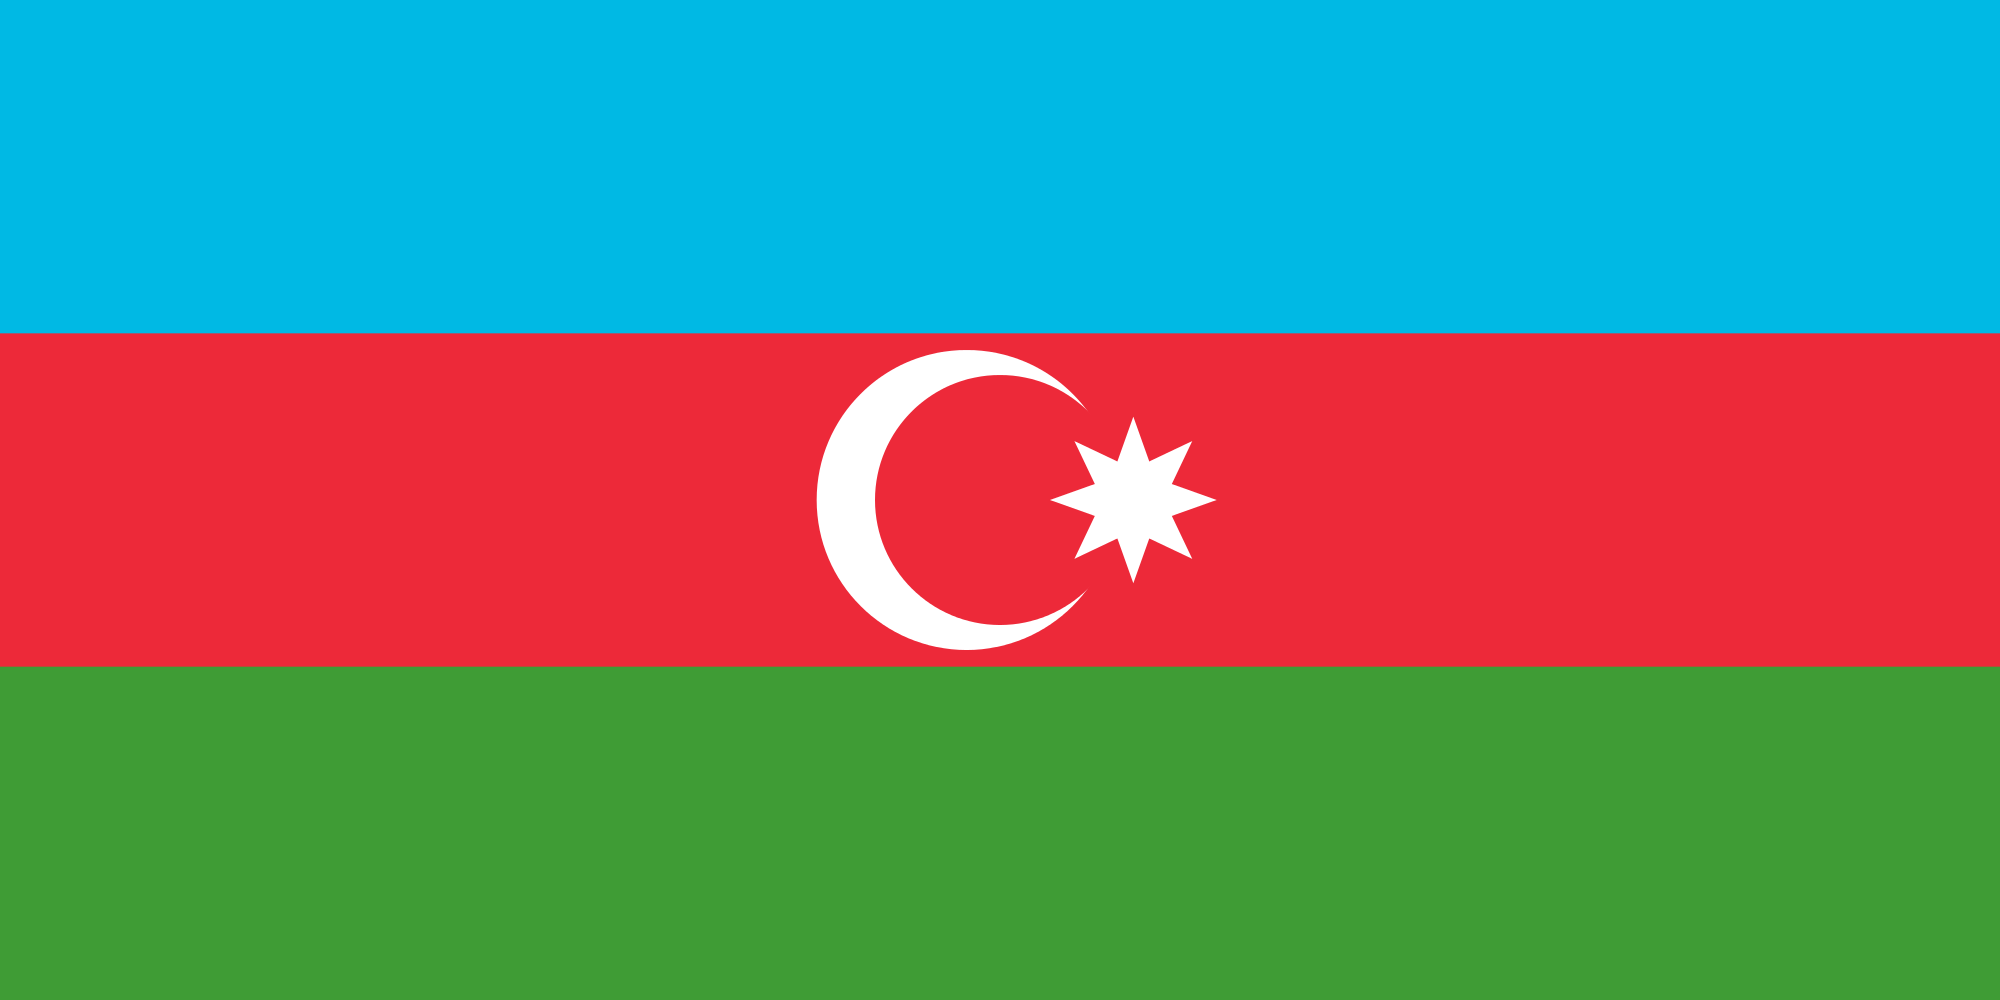 https://www.fintechfutures.com/files/2016/09/Azerbaijan-flag.png